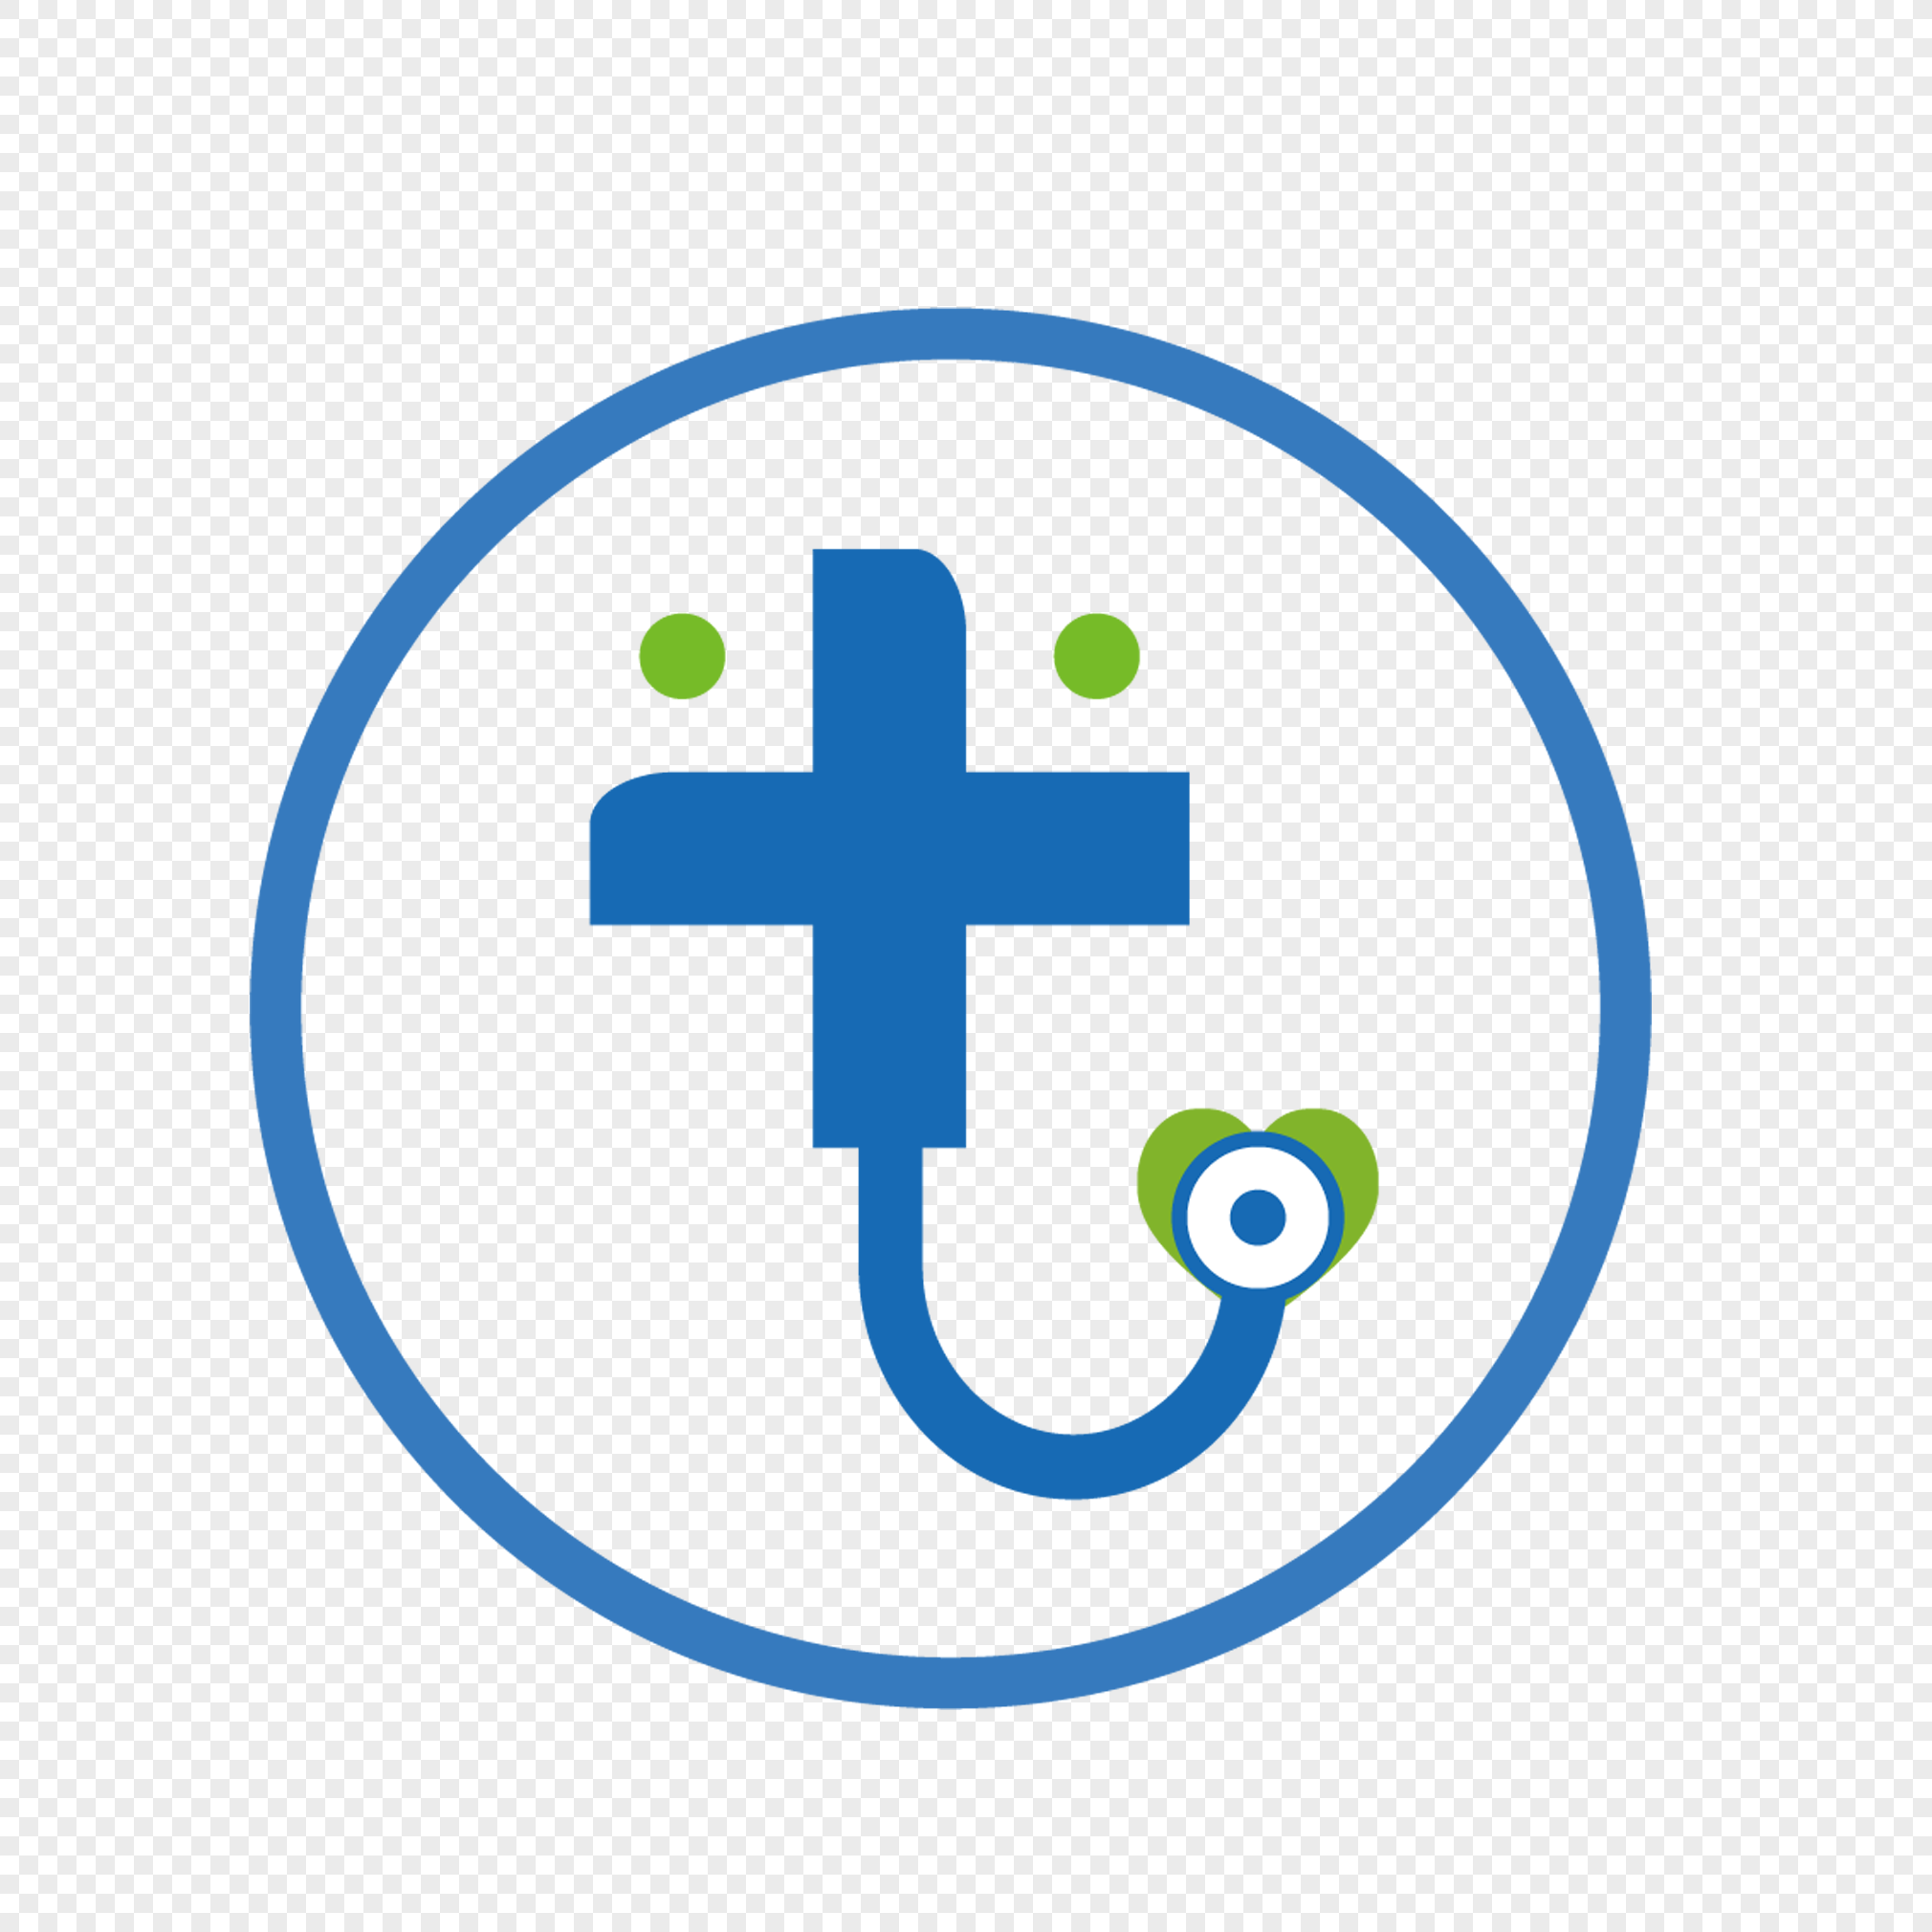 Medical Logo Caring A Heart Symbol Vector Icon Royalty Free SVG, Cliparts,  Vectors, and Stock Illustration. Image 102081350.